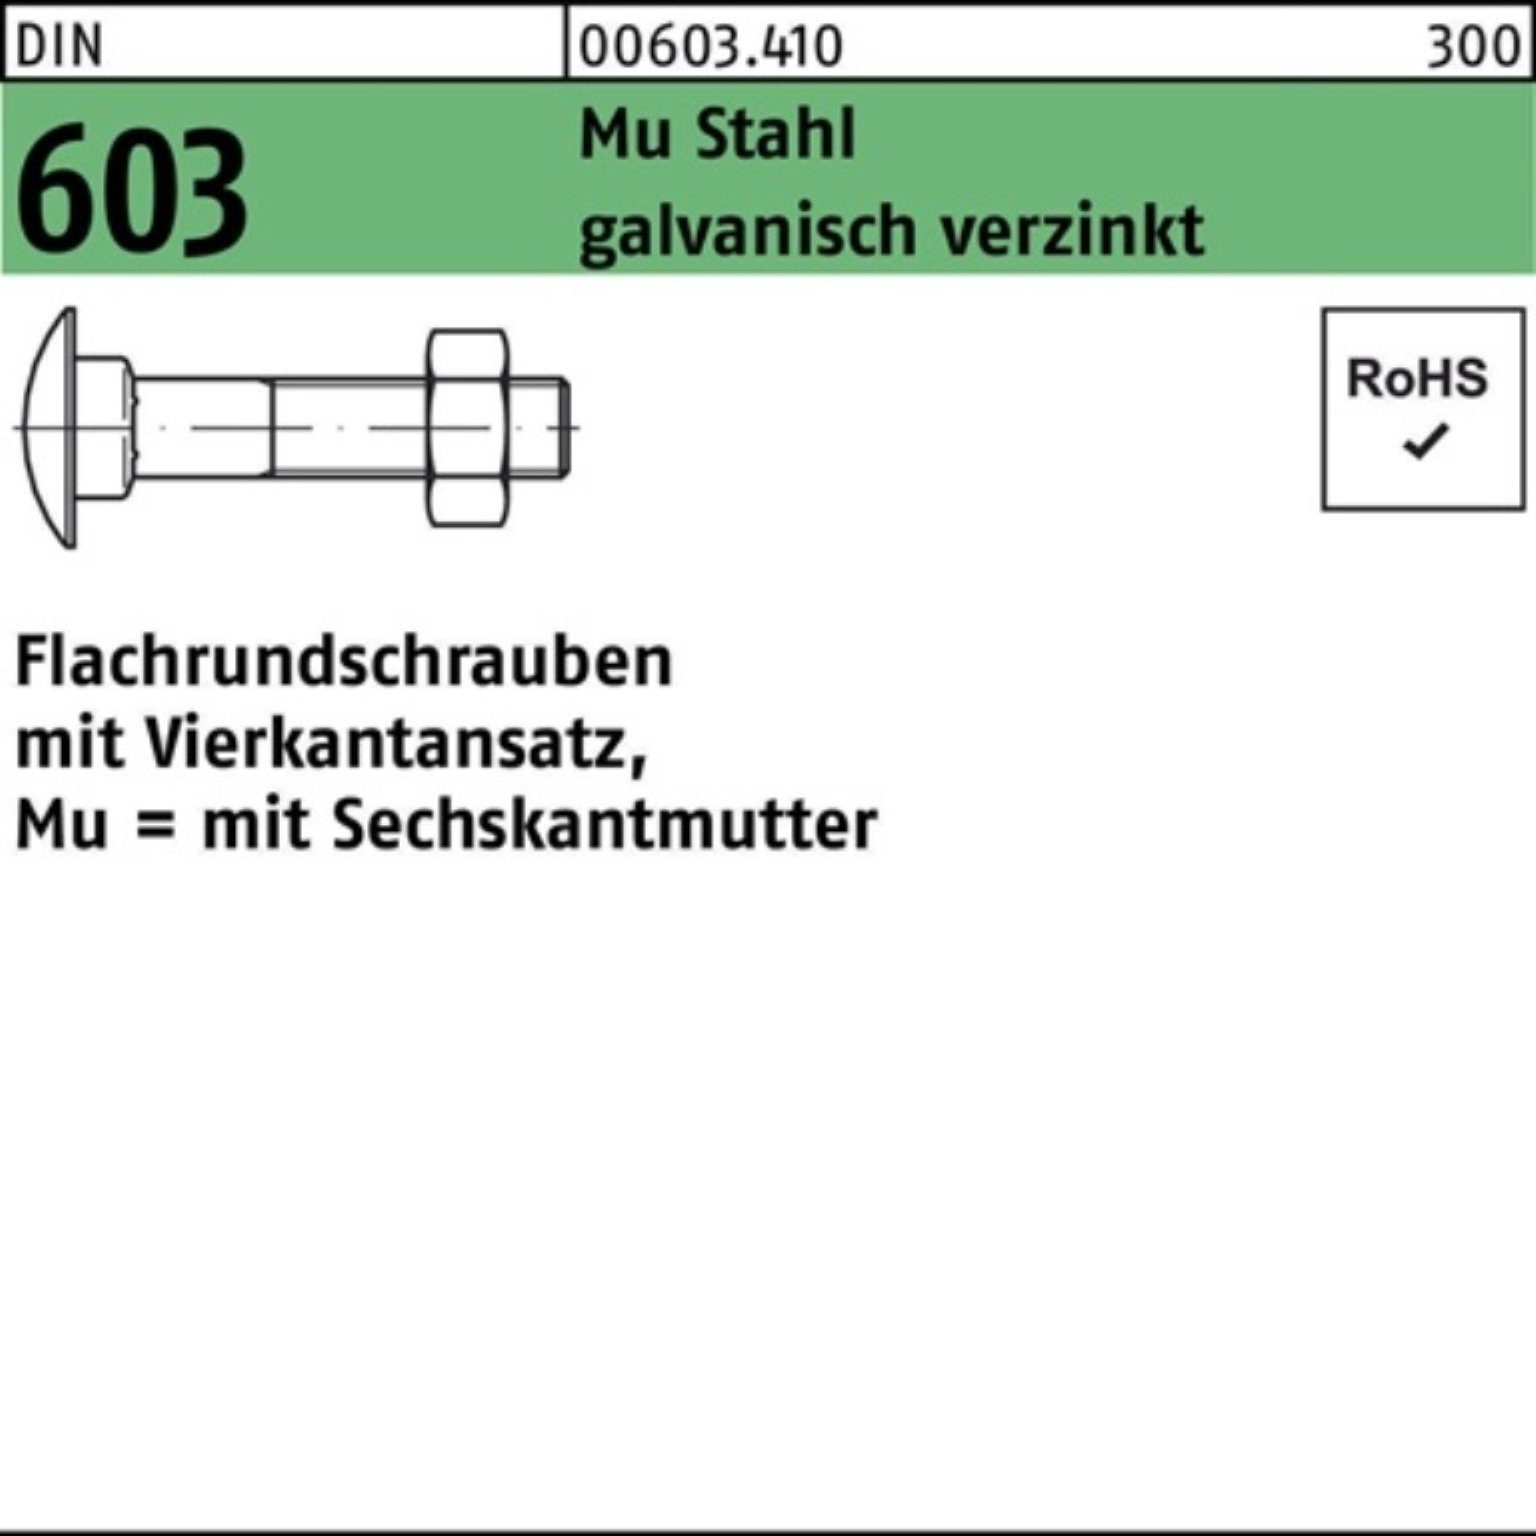 Reyher Schraube 100er Pack Flachrundschraube DIN 603 Vierkantansatz/6-ktmutter M10x170